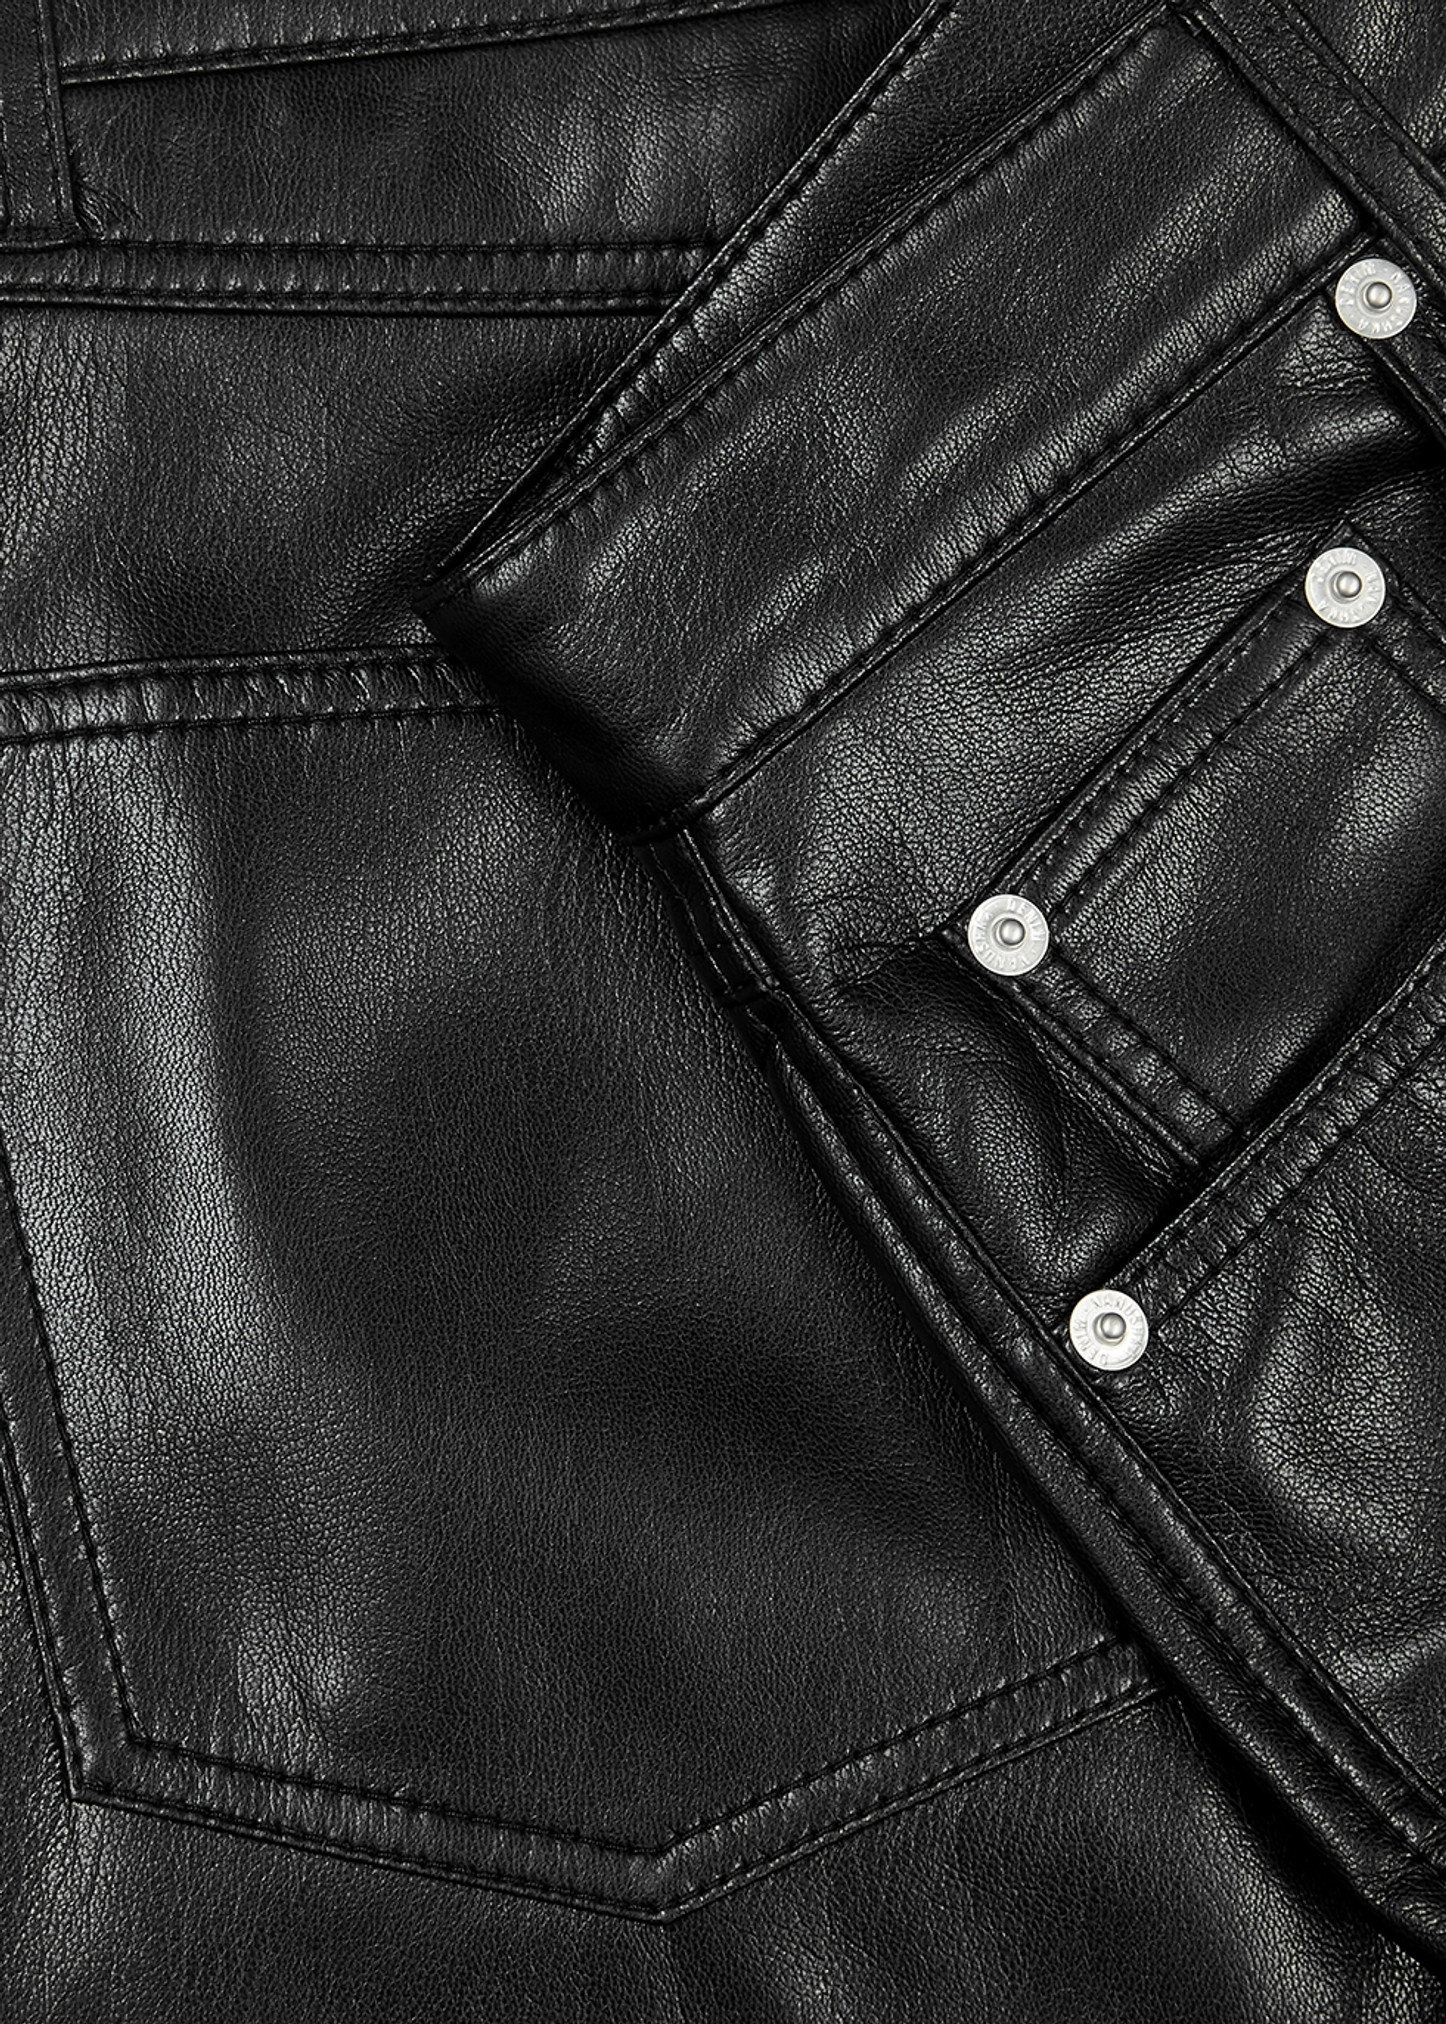 Vinni black faux leather trousers - 5